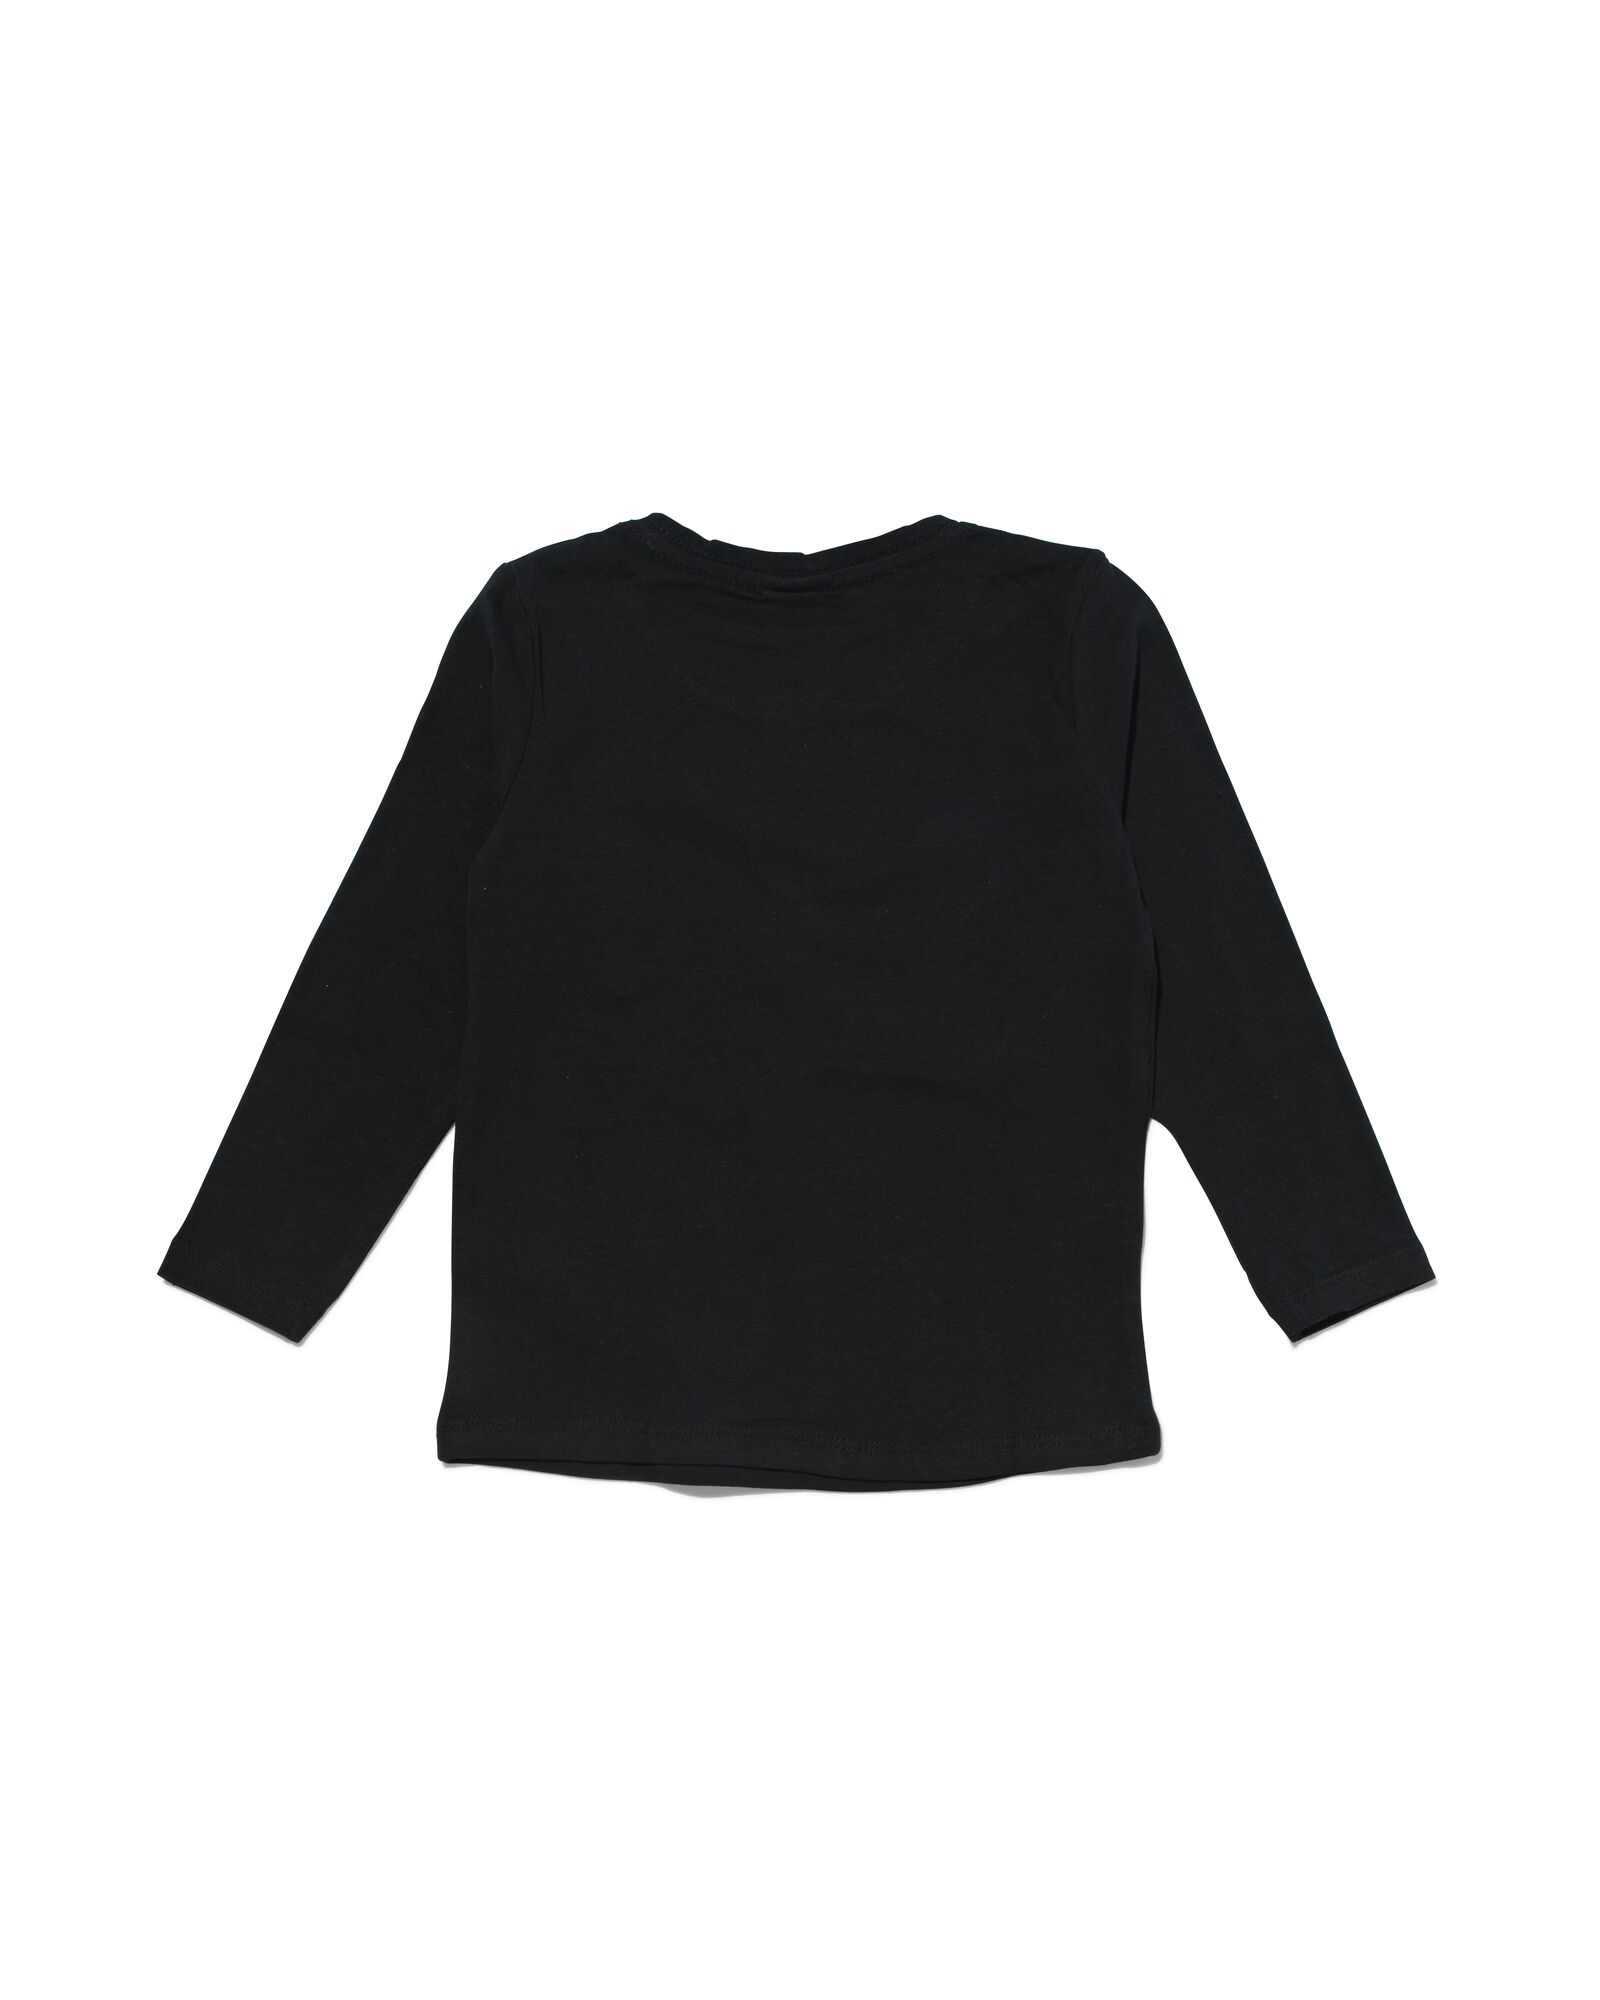 t-shirt enfant noir 110/116 - 30843644 - HEMA